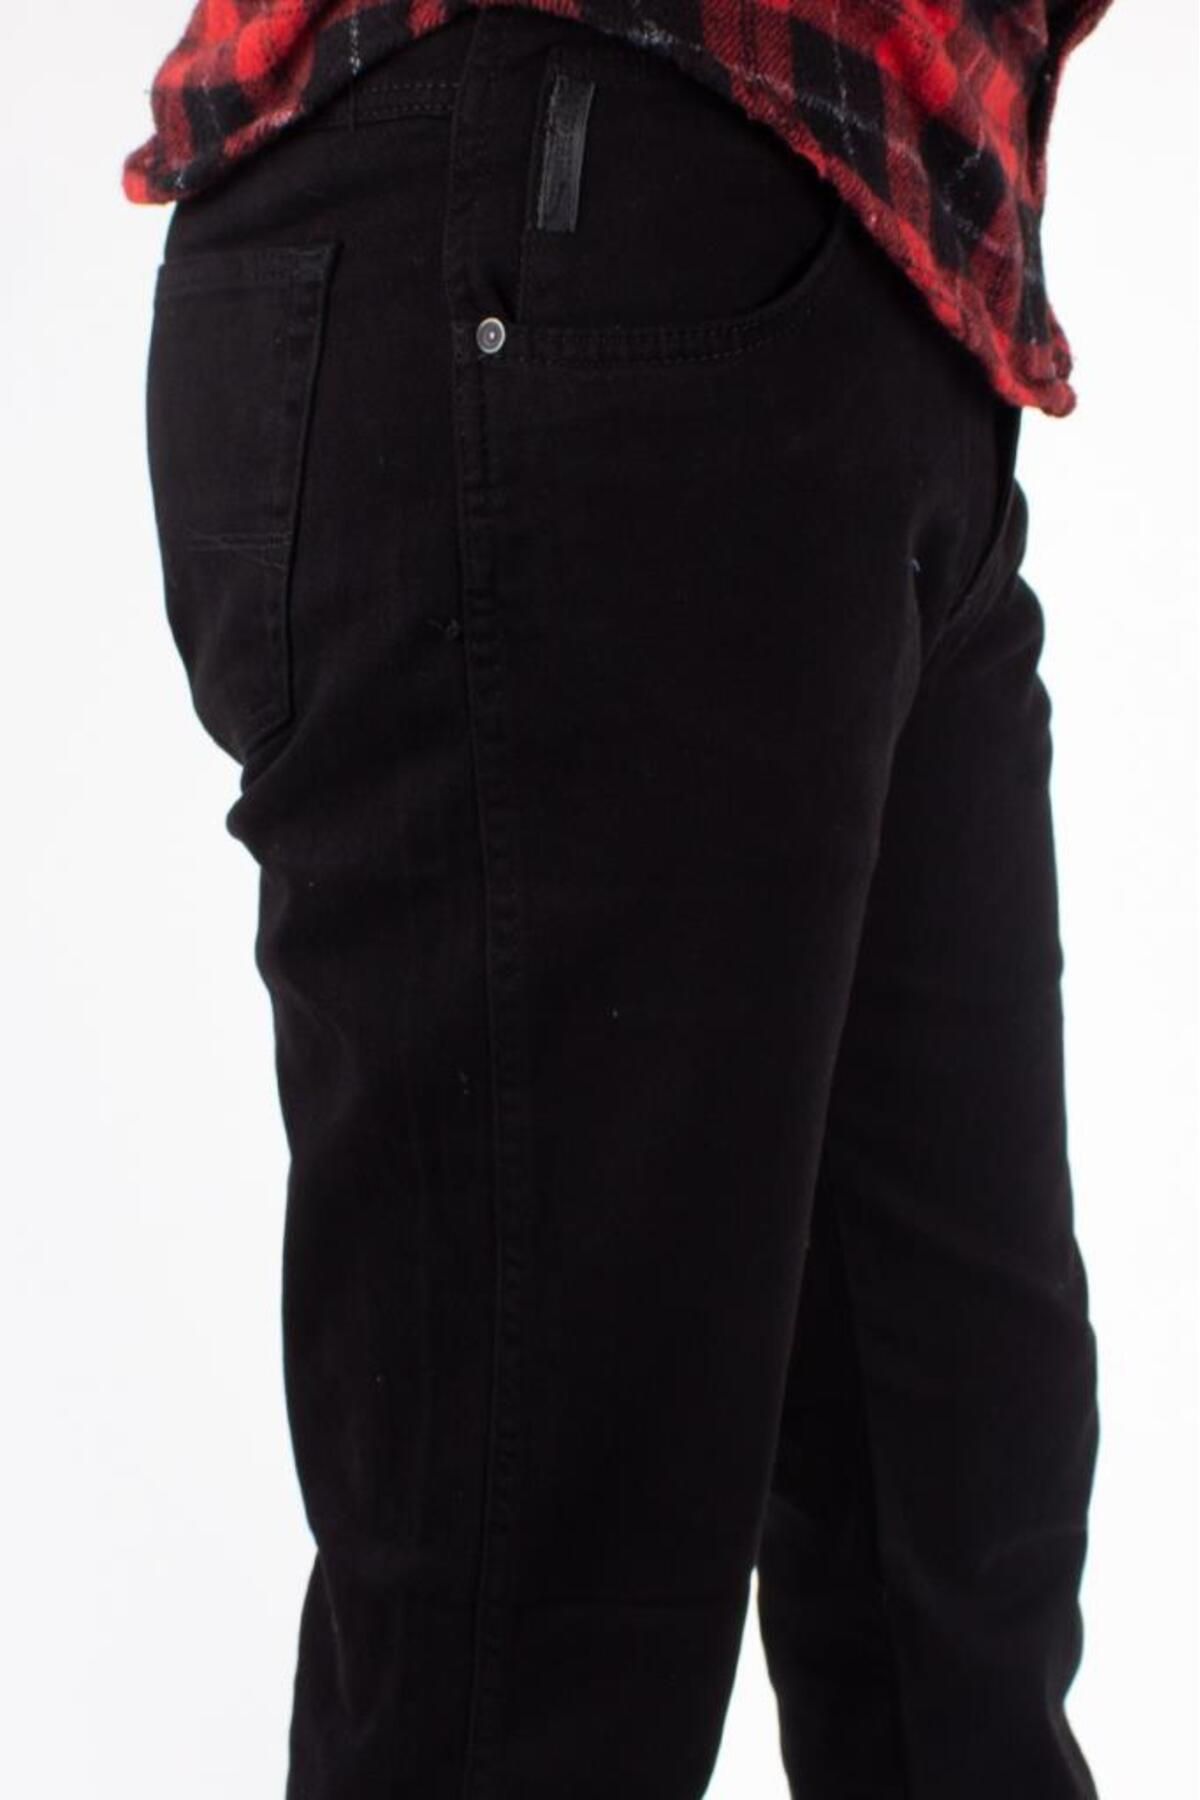 Twister Jeans Twister Vegas 132-236 Siyah Yüksek Bel Rahat Paça Erkek Jeans Pantolon